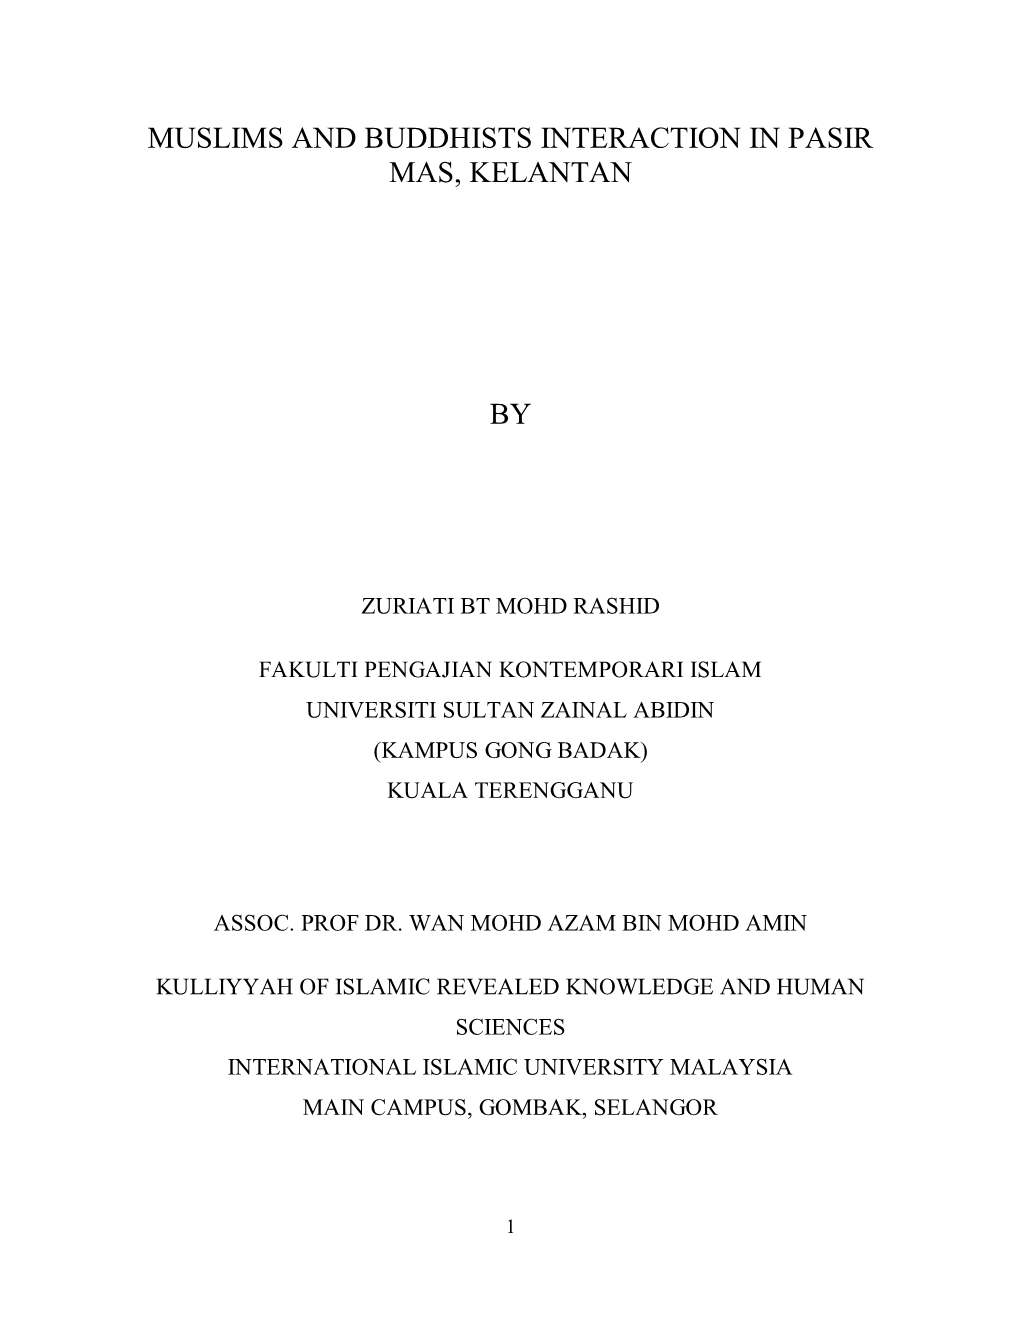 Muslims and Buddhists Interaction in Pasir Mas, Kelantan